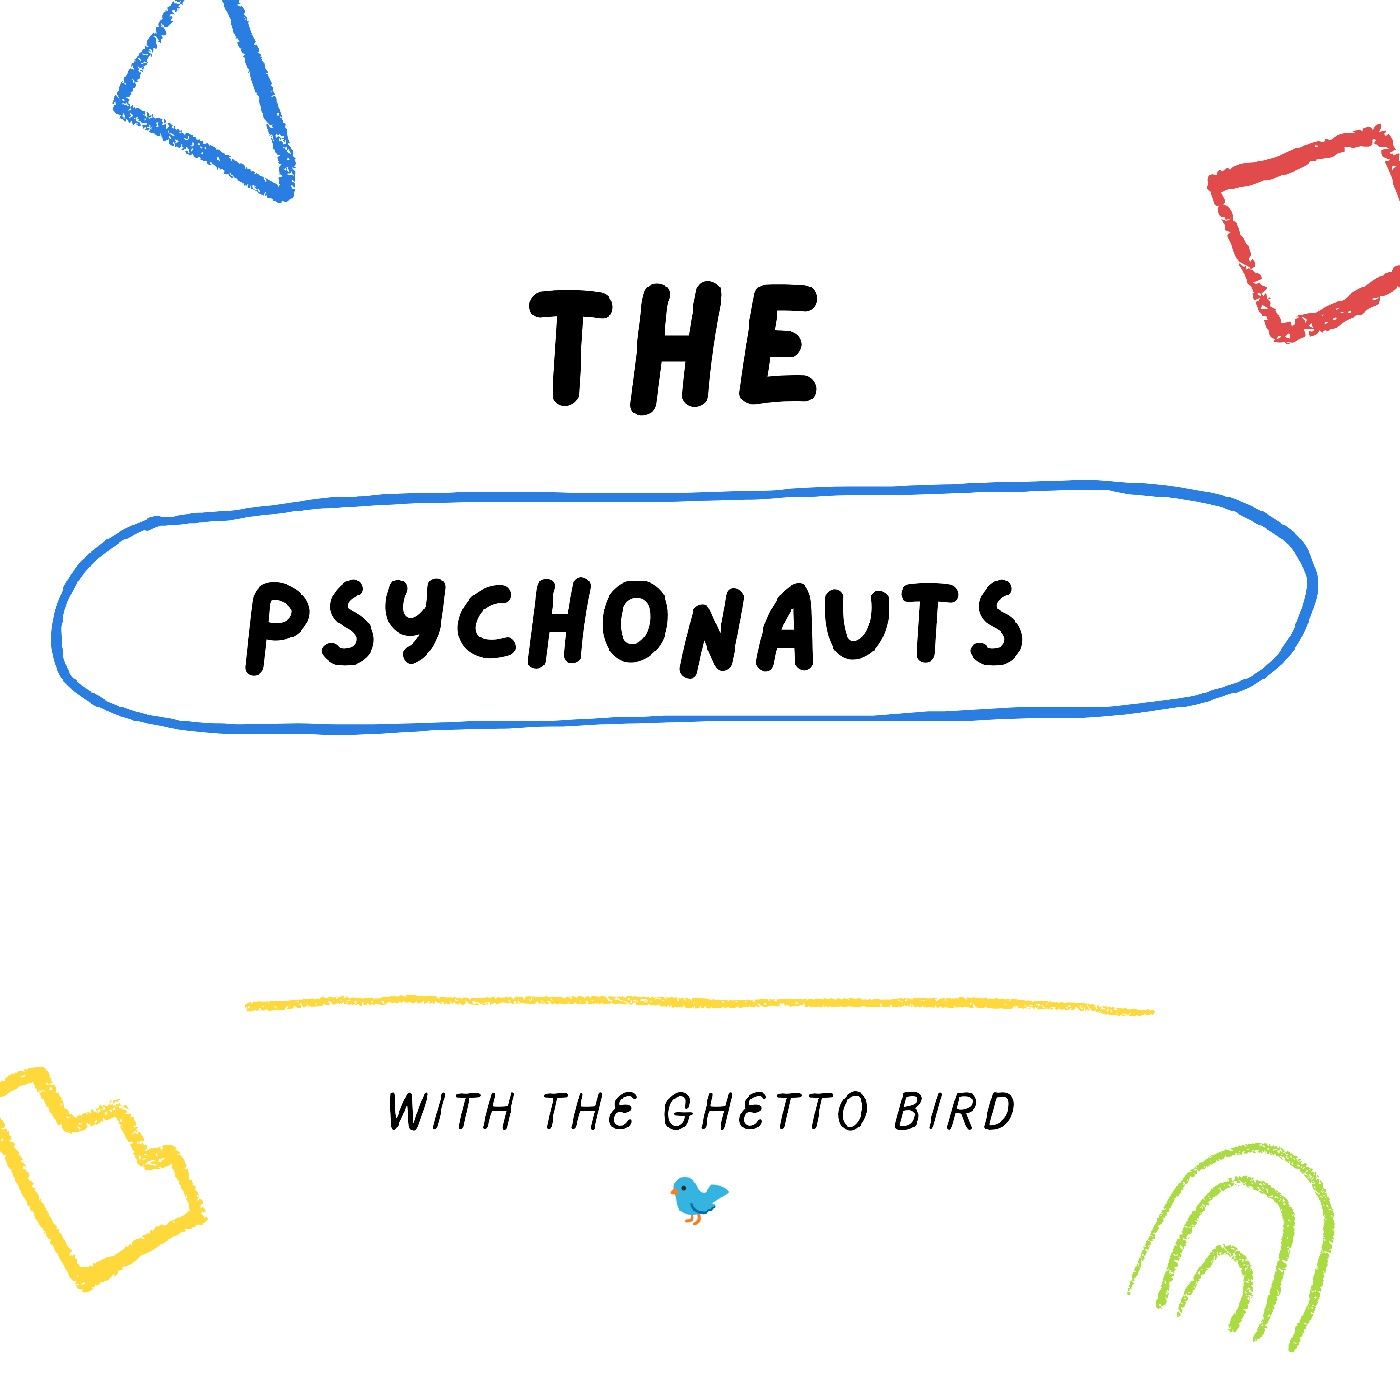 The Psychonauts